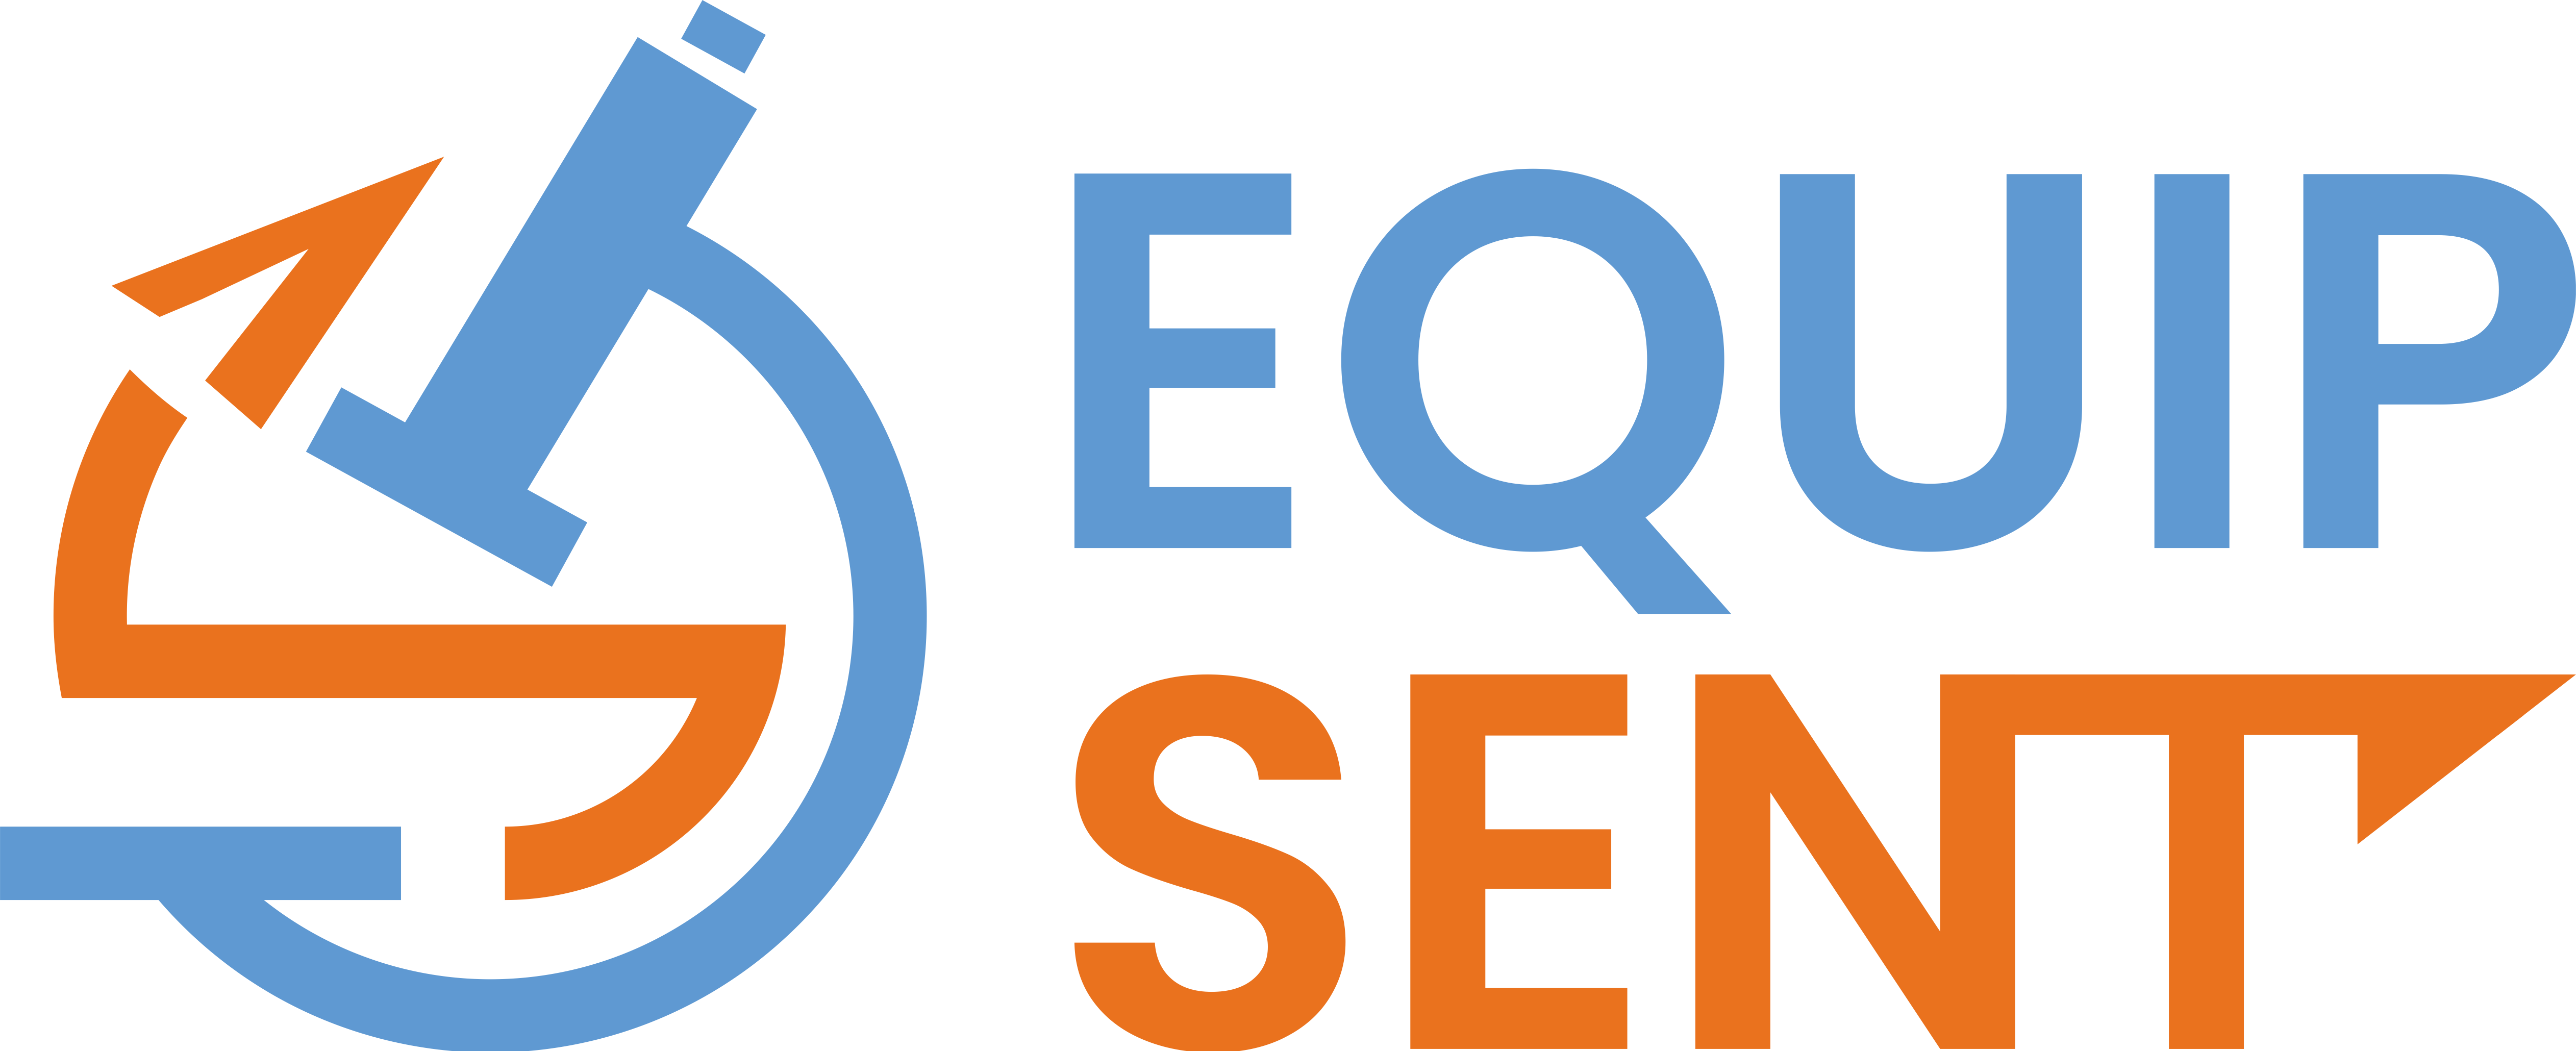 EquipSent logo